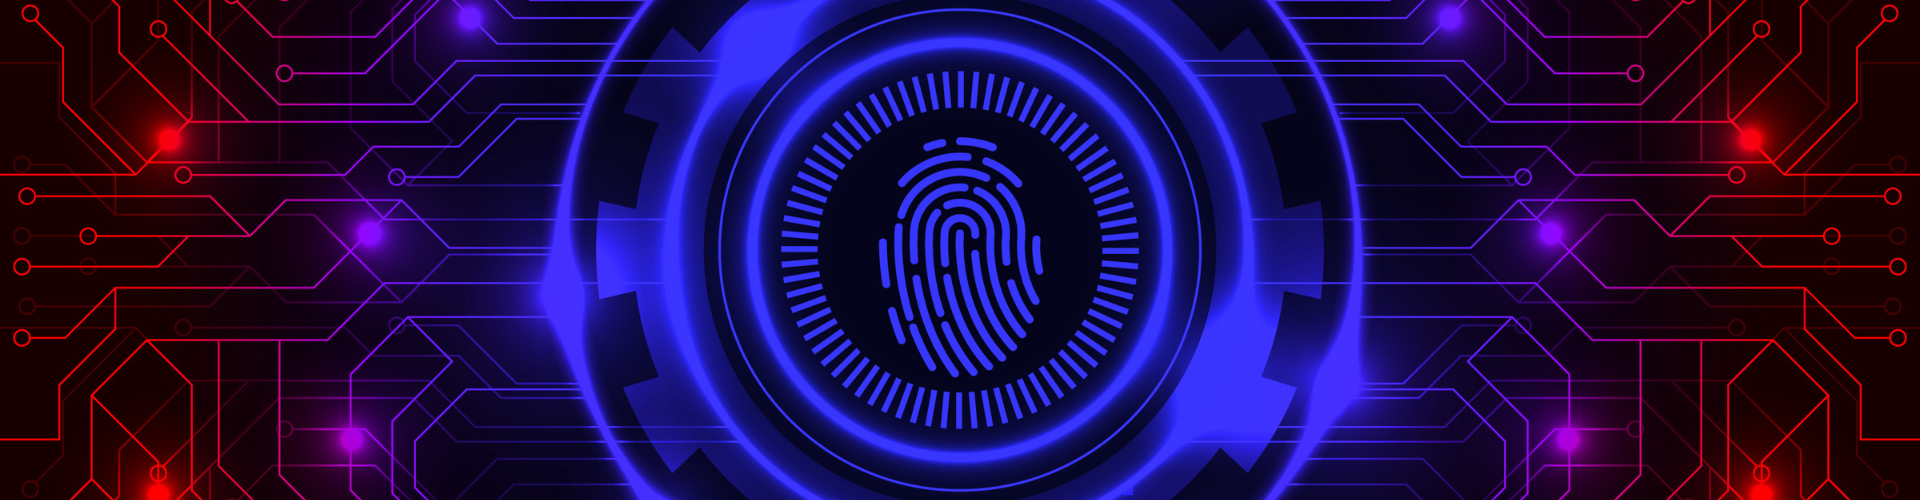 Biometric fingerprint identification